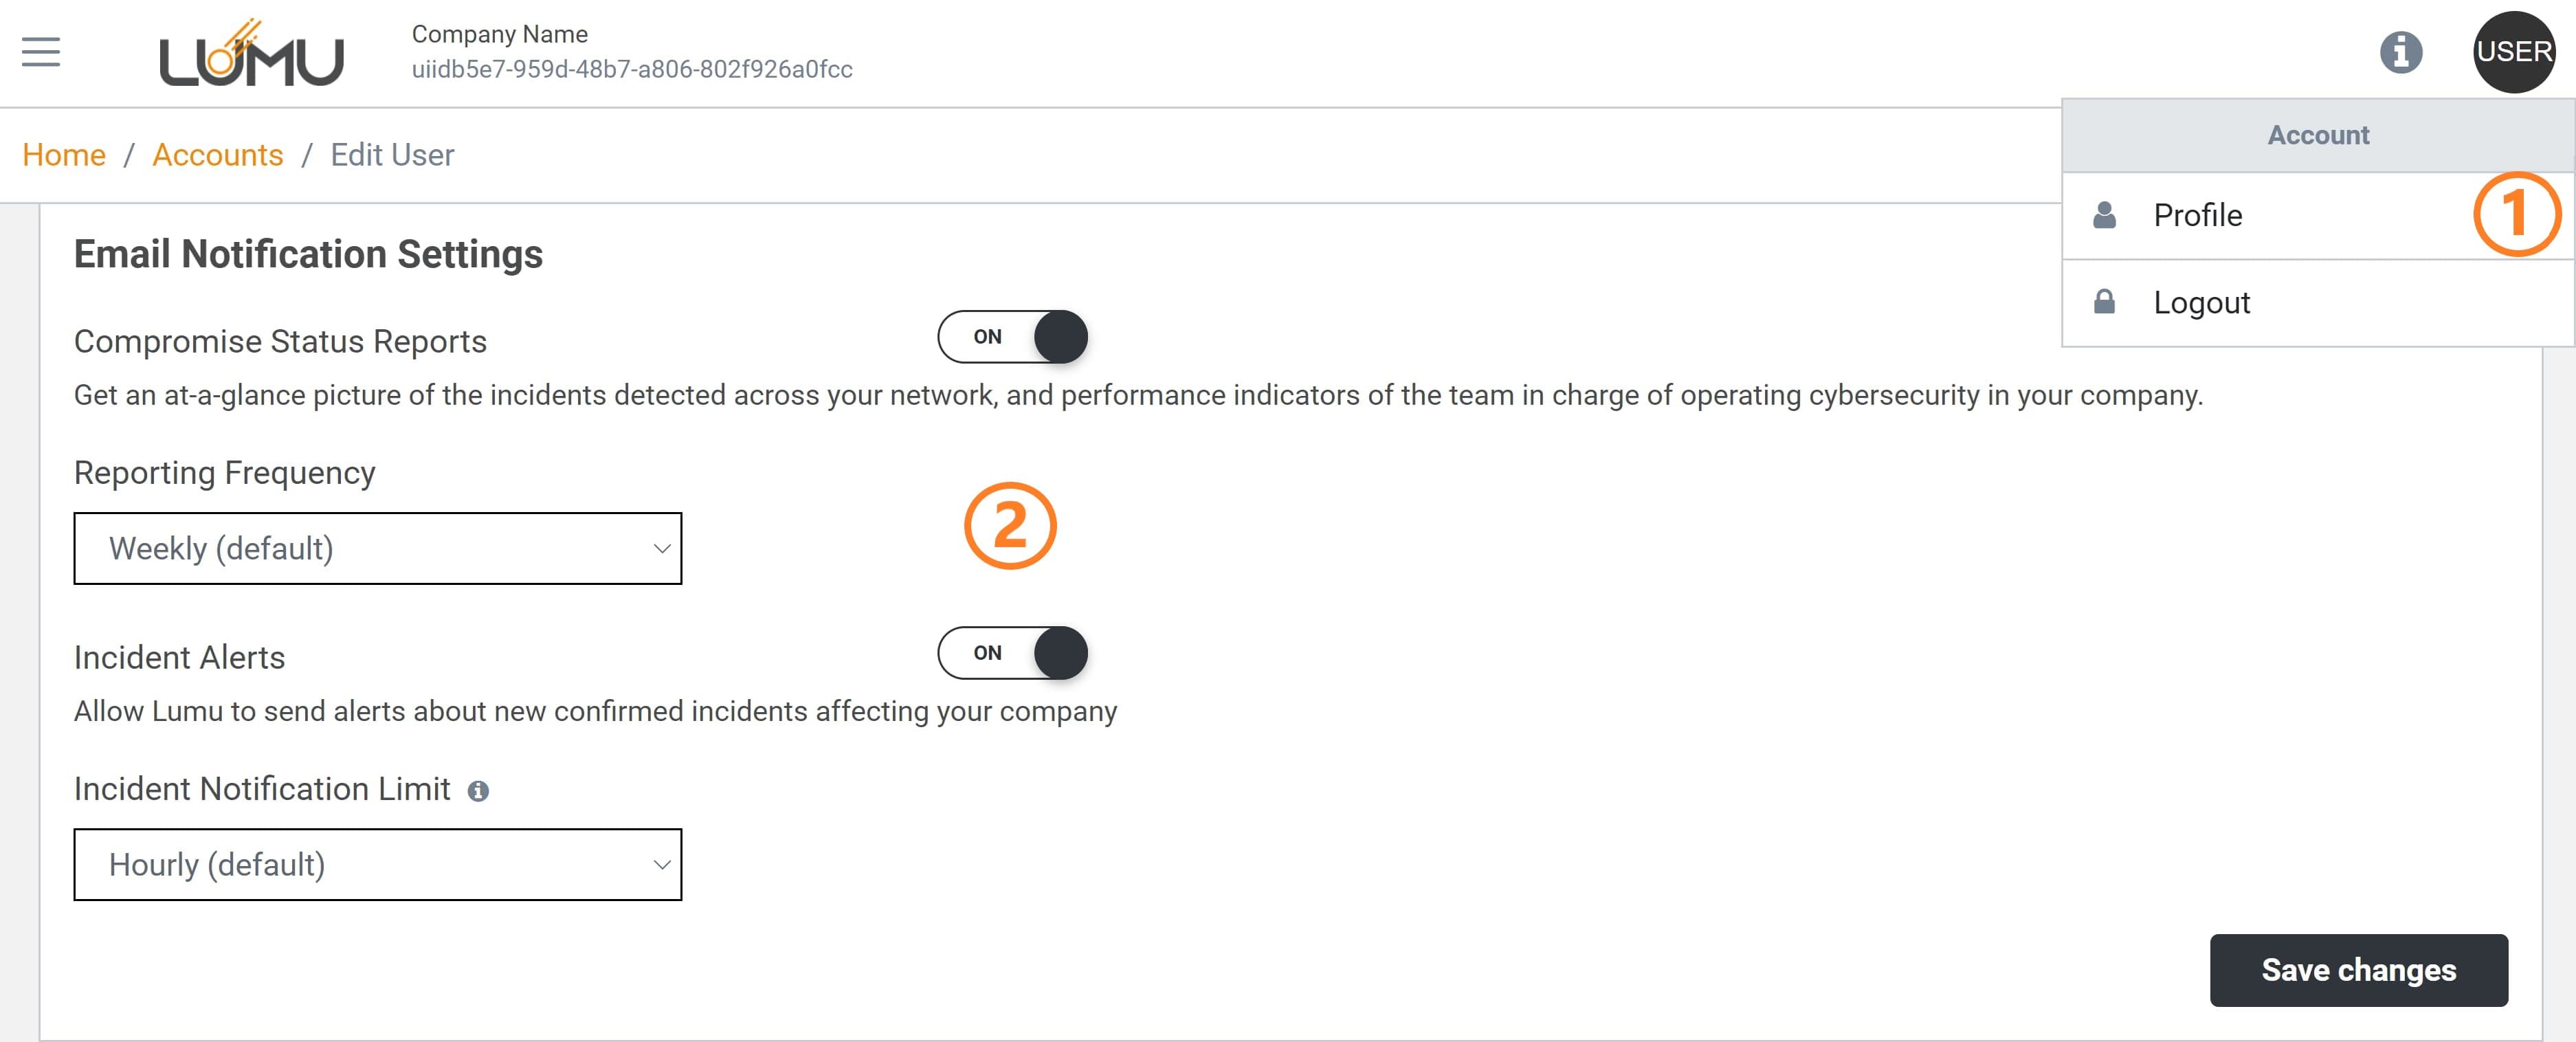 Email notification settings - Lumu Portal